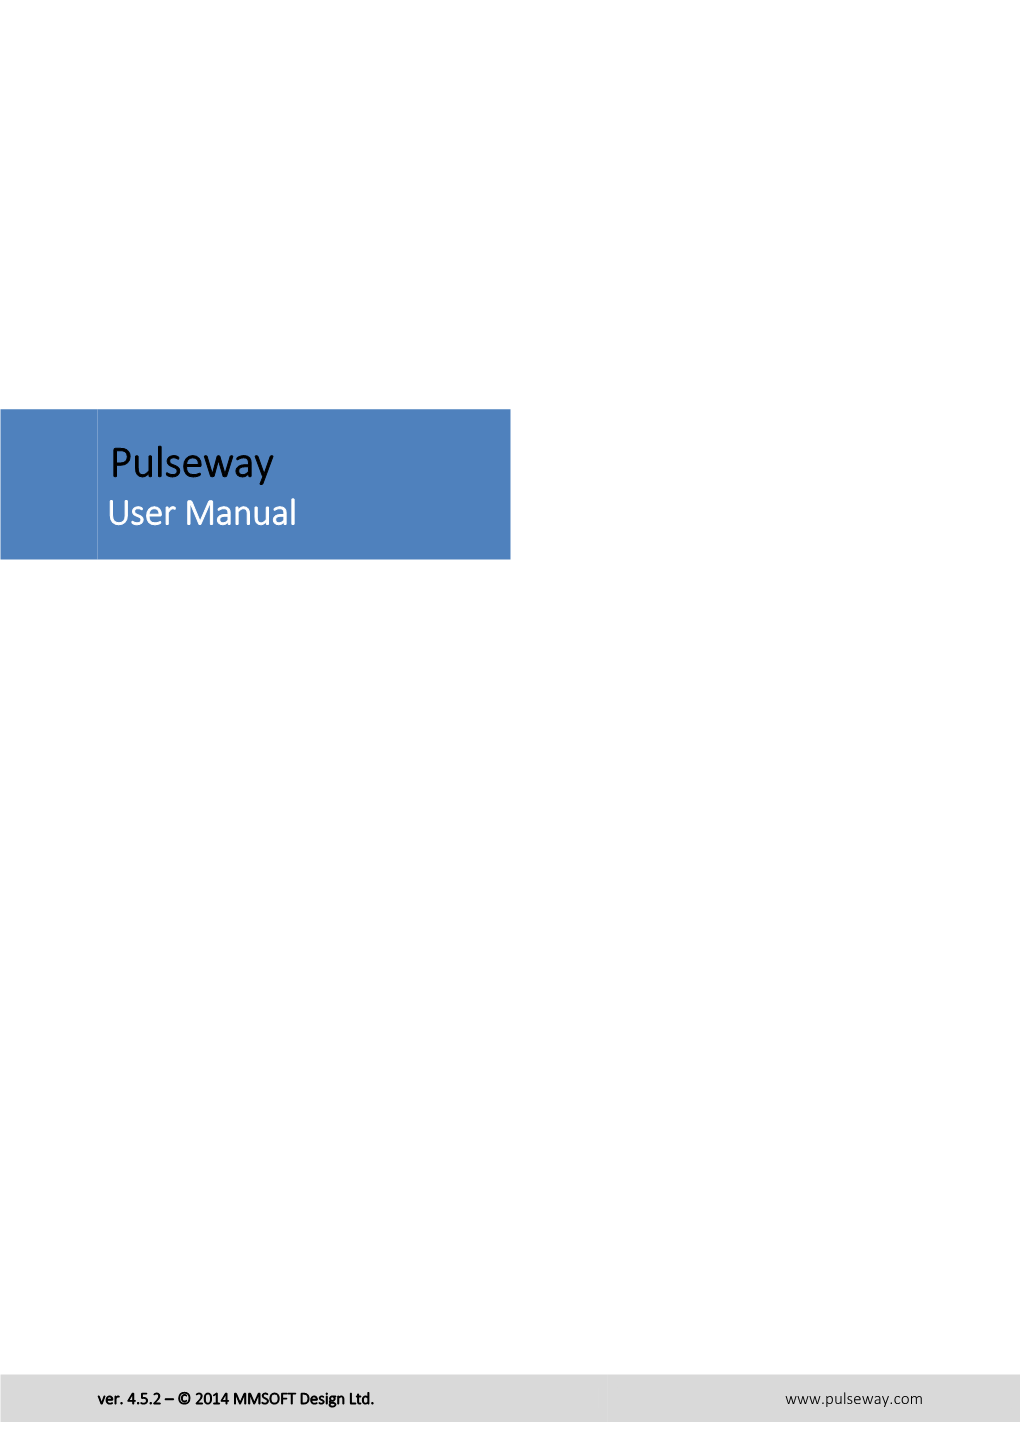 Pulseway User Manual